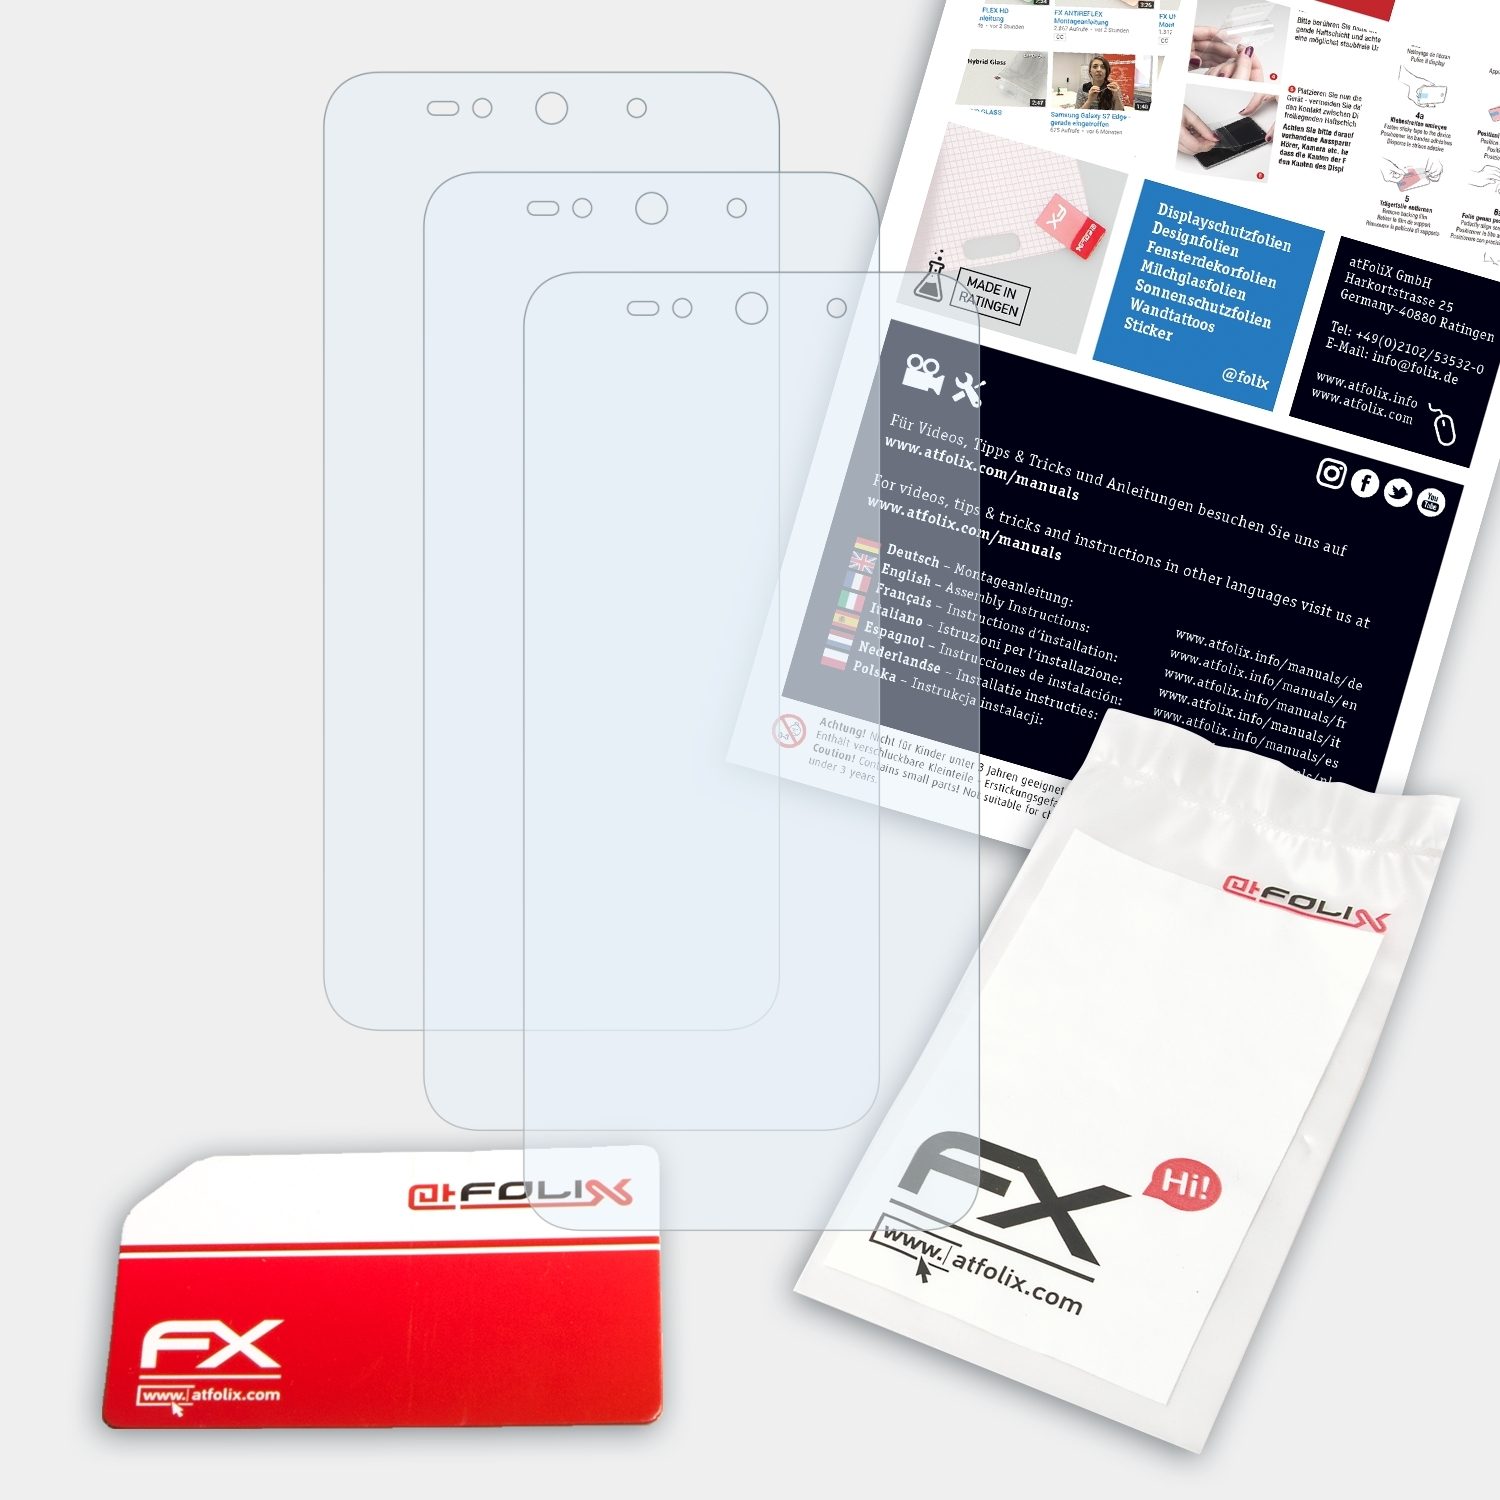 ATFOLIX 3x BLU Max) Displayschutz(für FX-Clear Grand